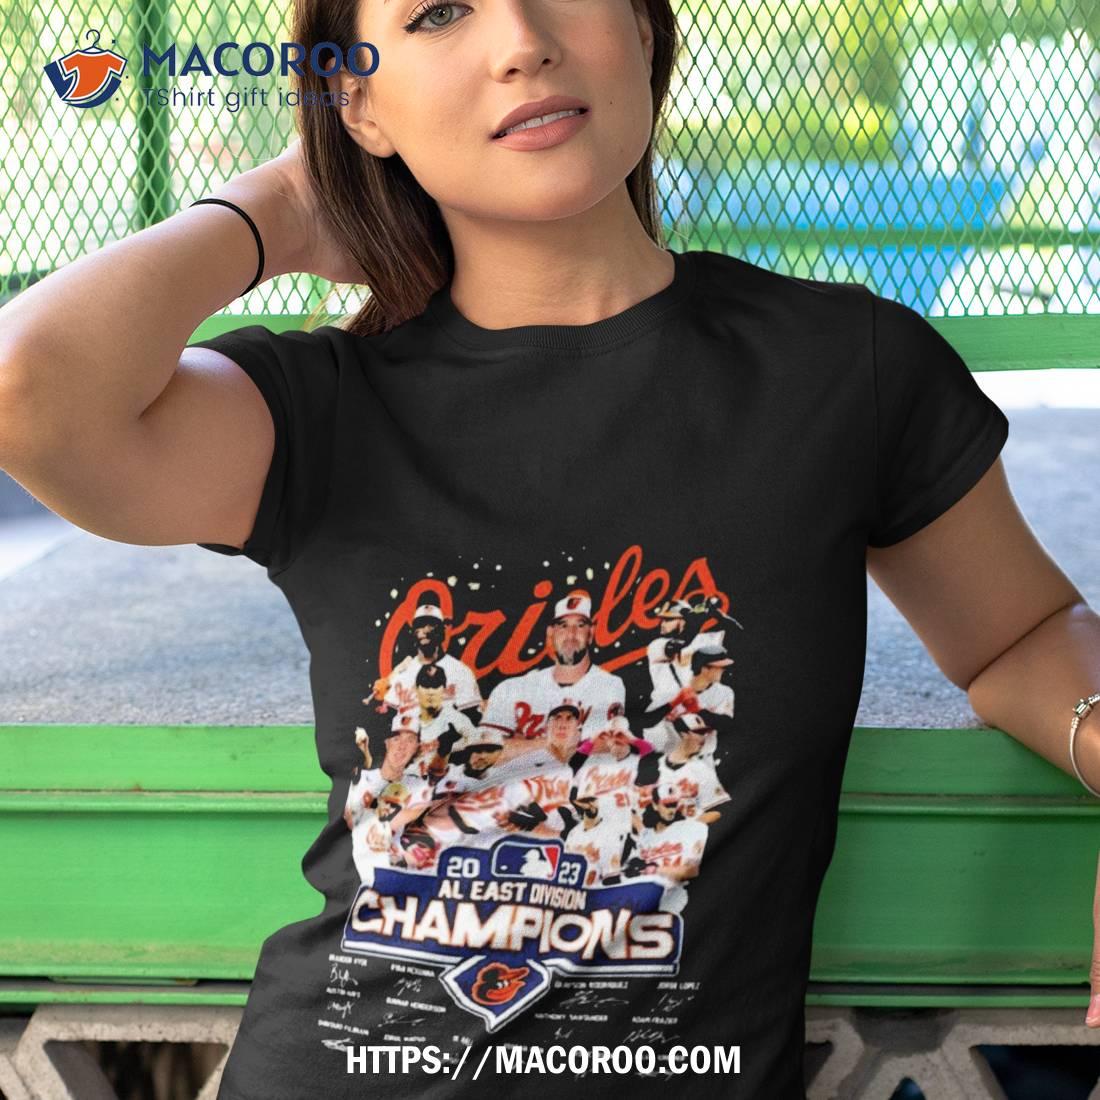 Baltimore Orioles True Fan T-shirt Jersey Large Orange Polyester